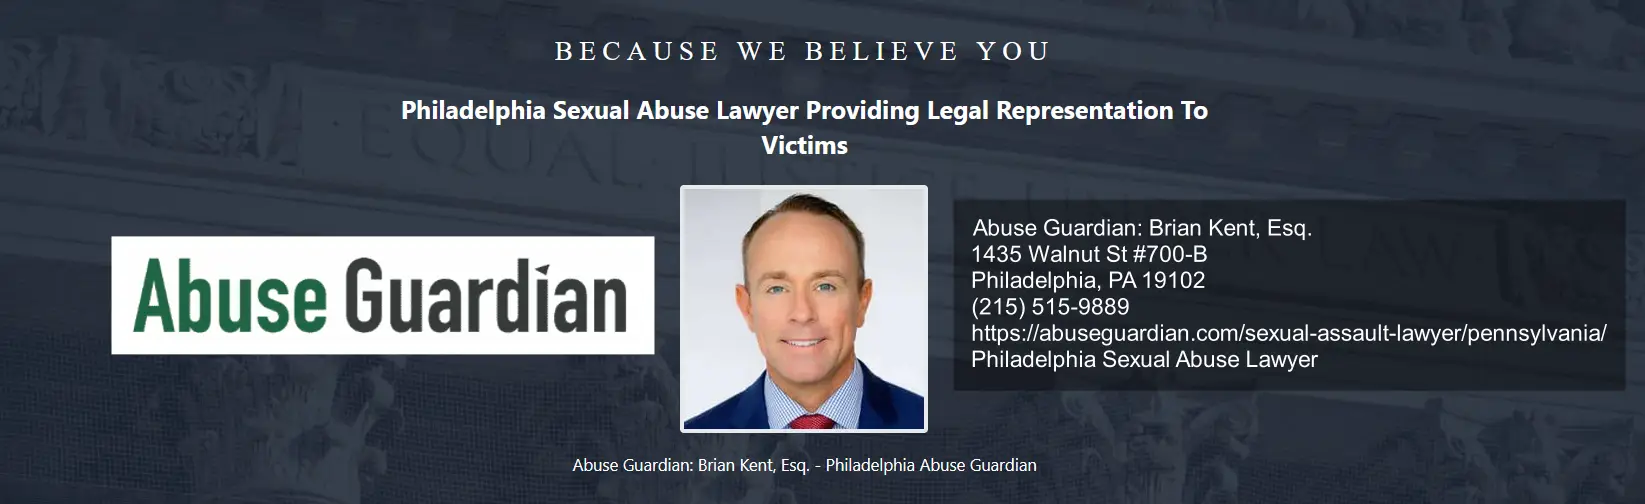 sexual abuse lawyer near me abuse guardian brian kent, esq. philadelphia